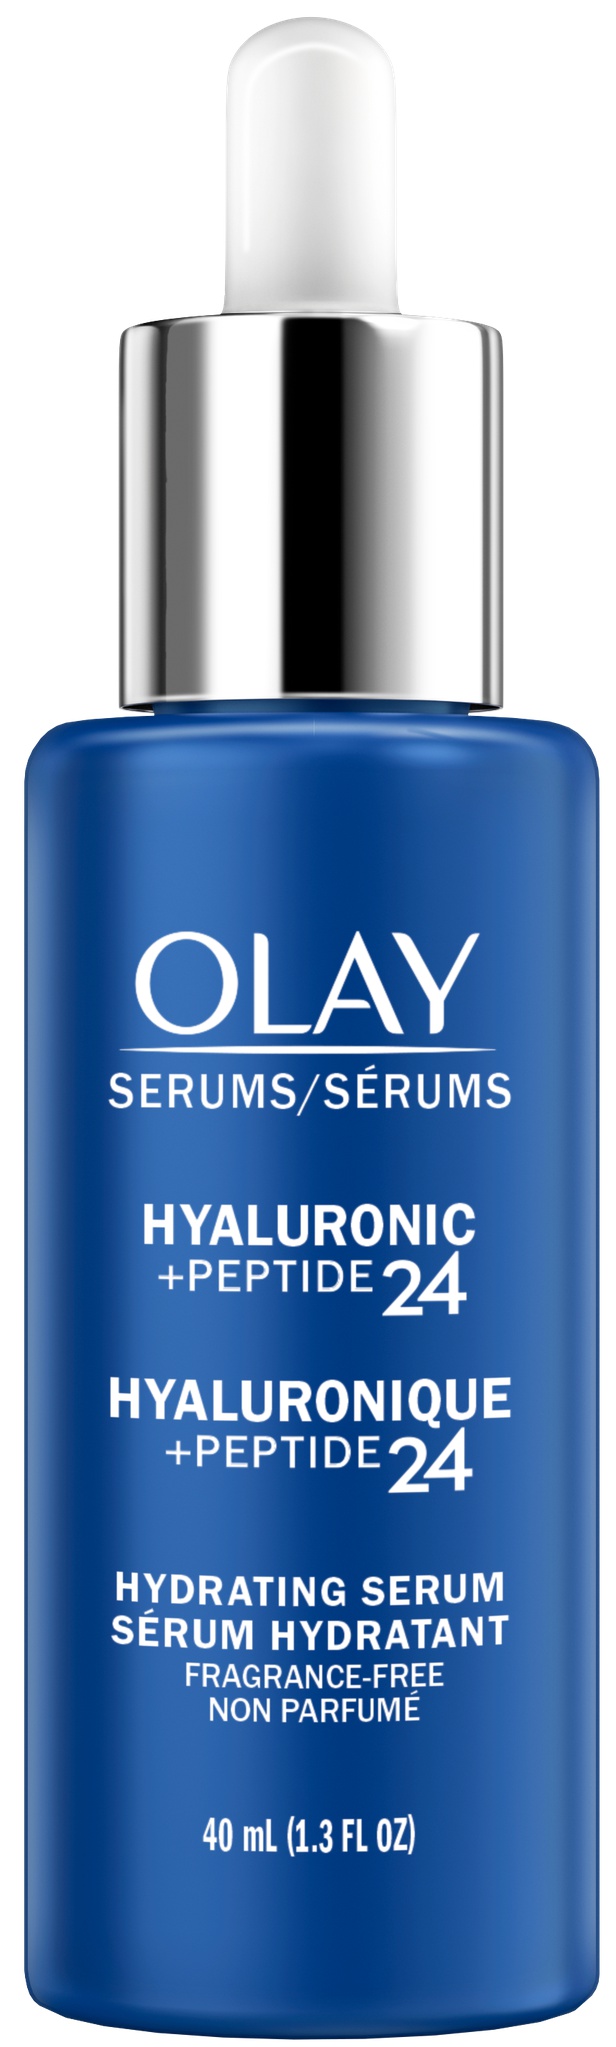 Olay Hyaluronic + Peptide 24 Serum